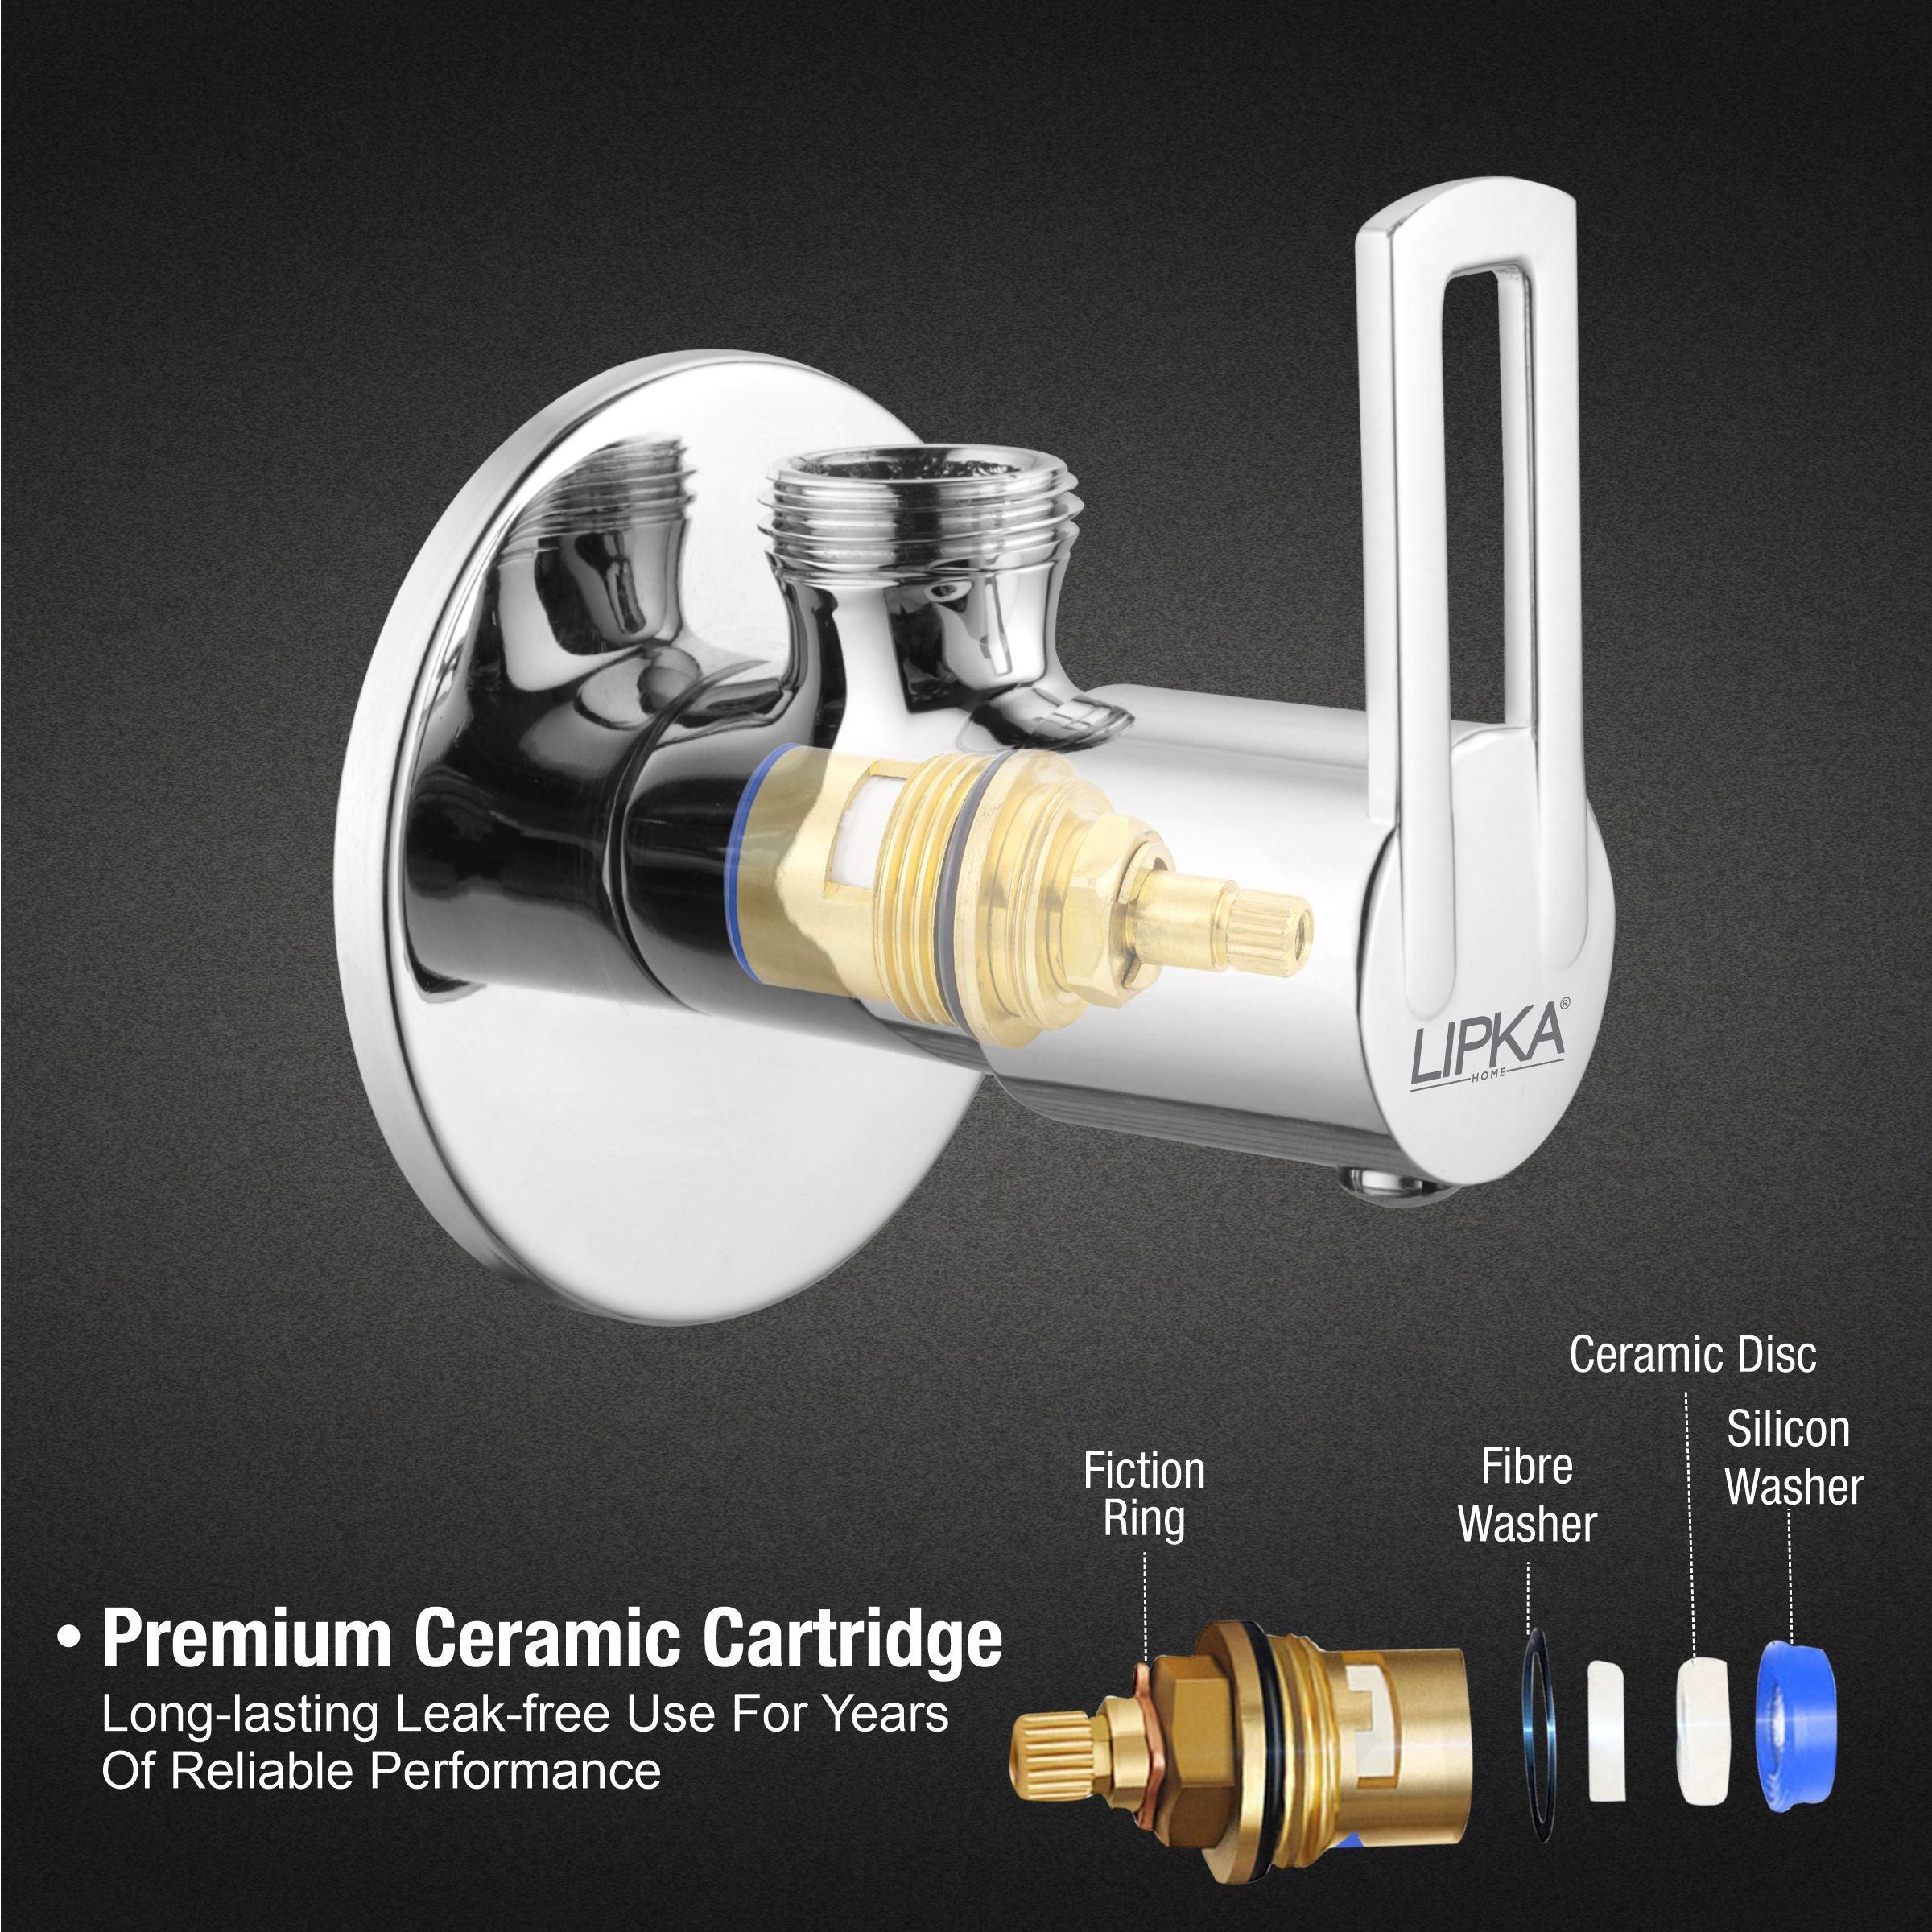 Kube Angle Valve Brass Faucet - LIPKA - Lipka Home